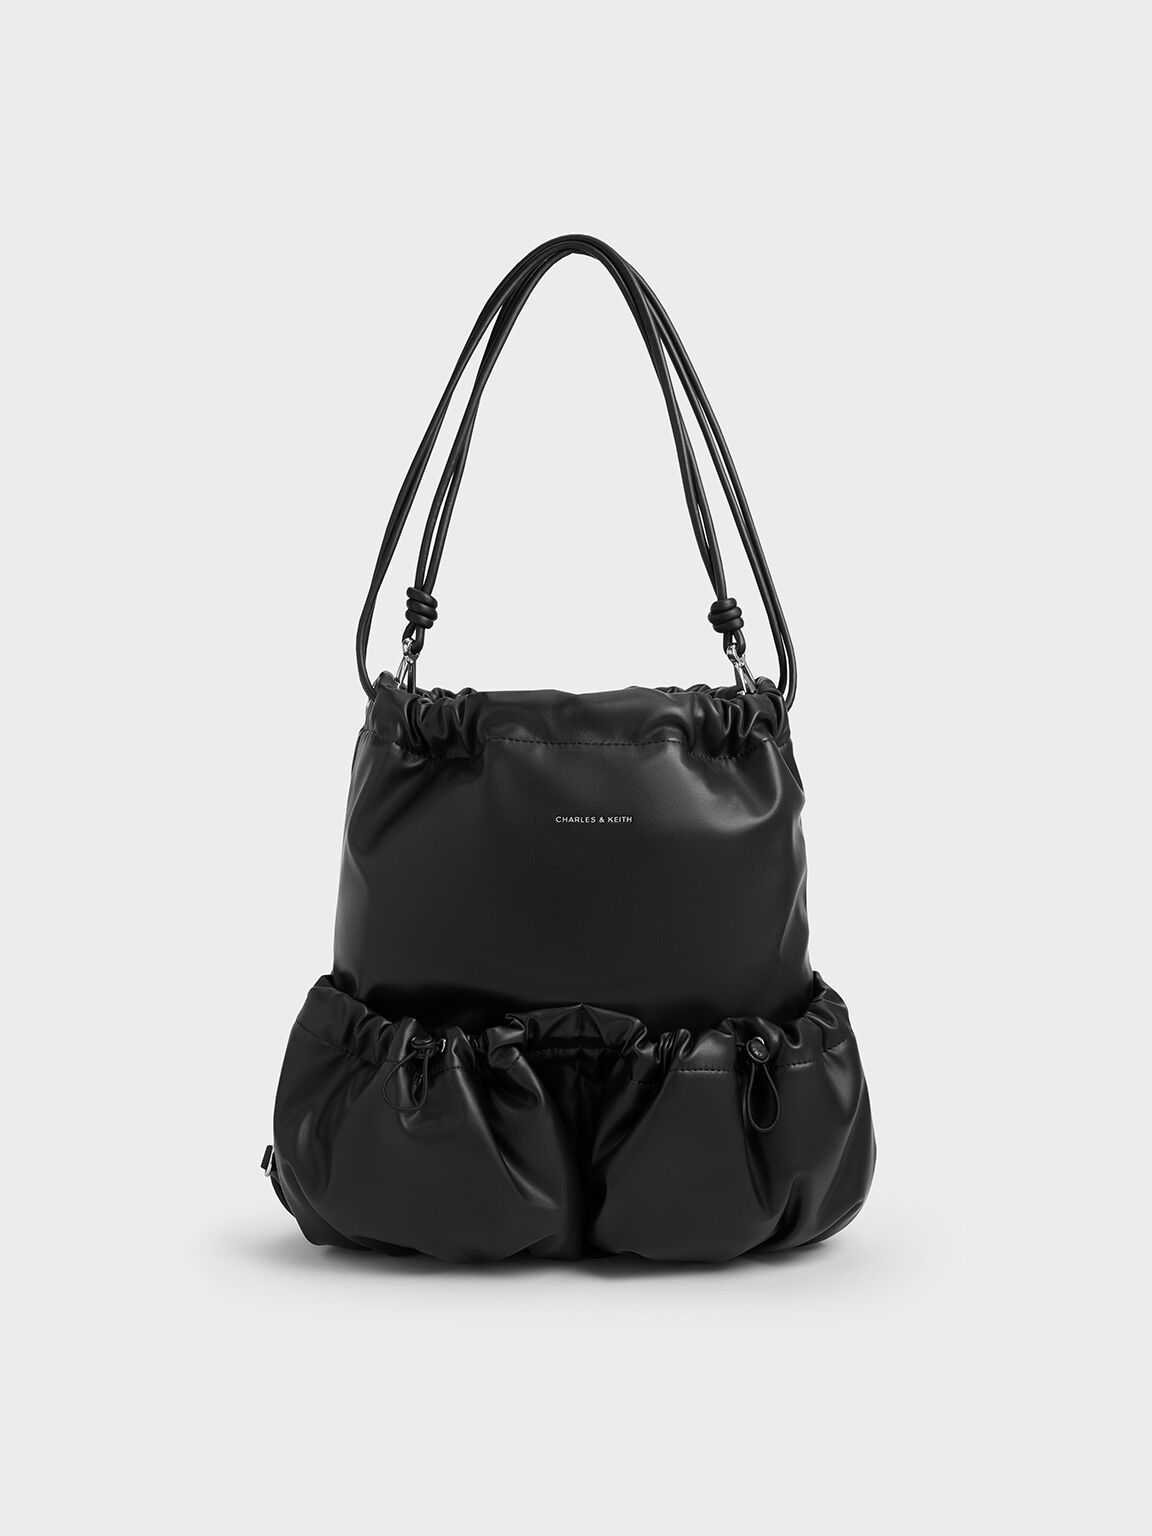 Maisy Ruched Drawstring Backpack, Noir, hi-res